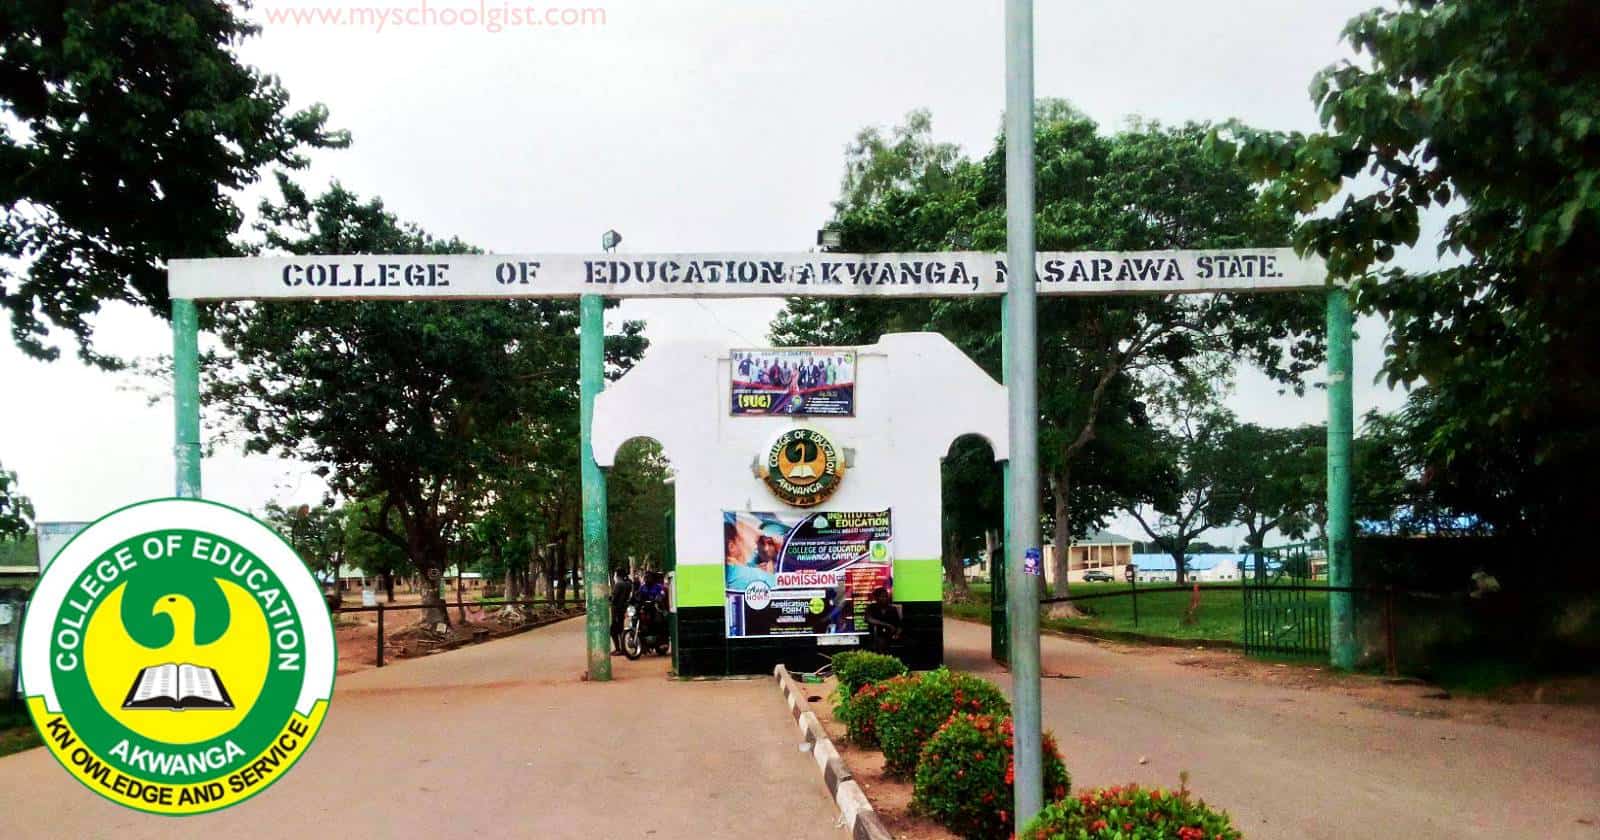 College of Education Akwanga Direct Entry Screening